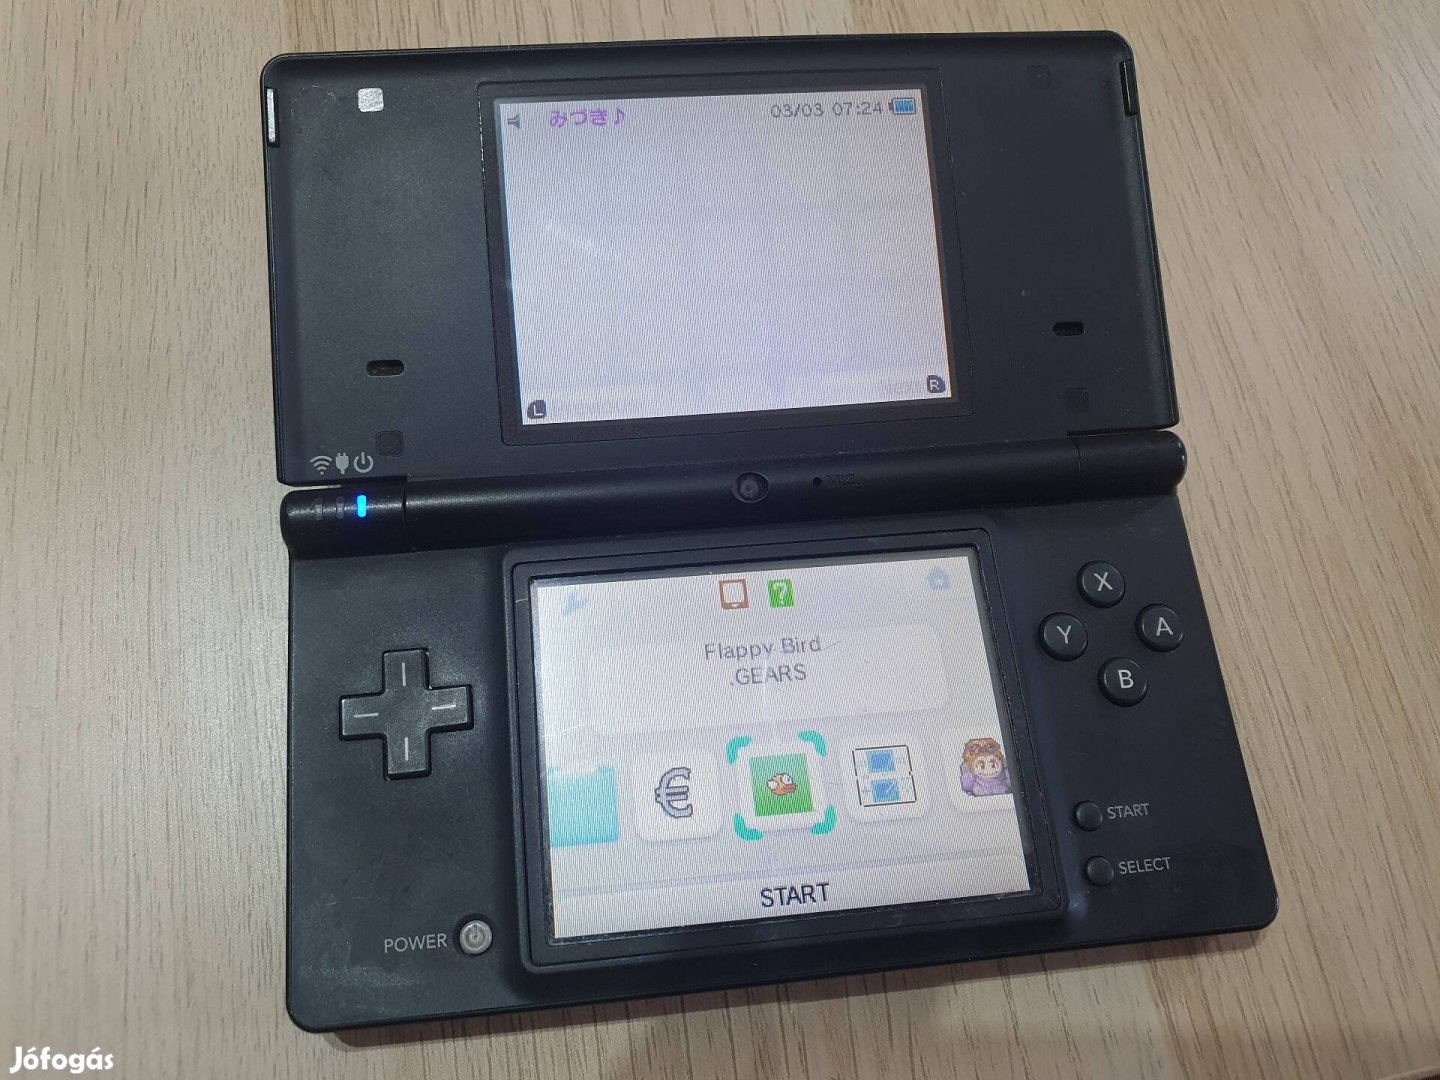 Nintendo DSI Cfw 2Gb